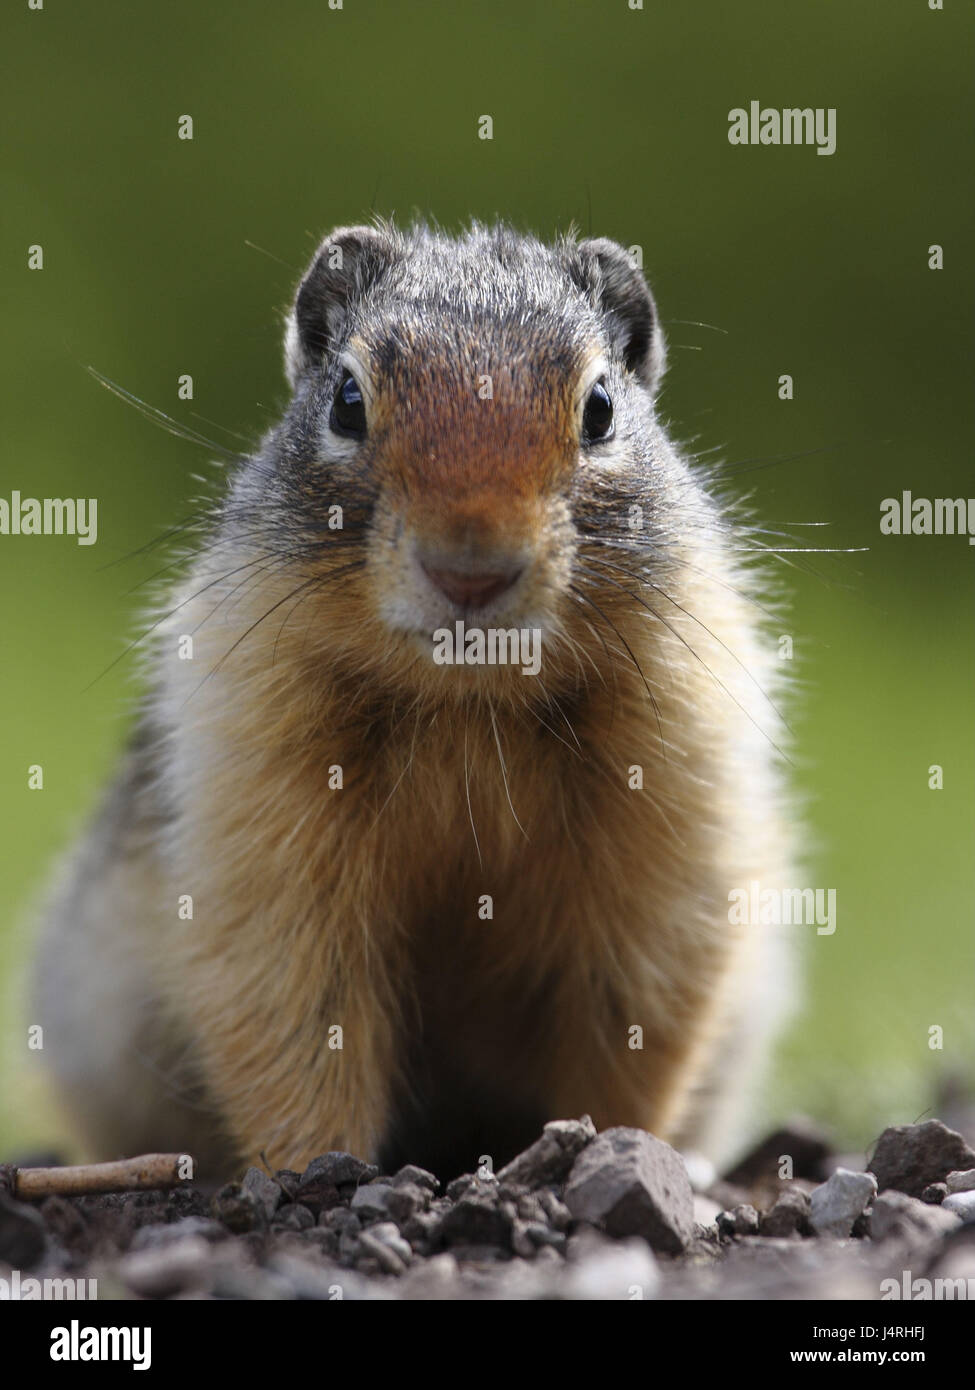 Gophers, Columbia Ground Squirrel, Spermophilus columbianus, alto animal, seated on gravel, Stock Photo